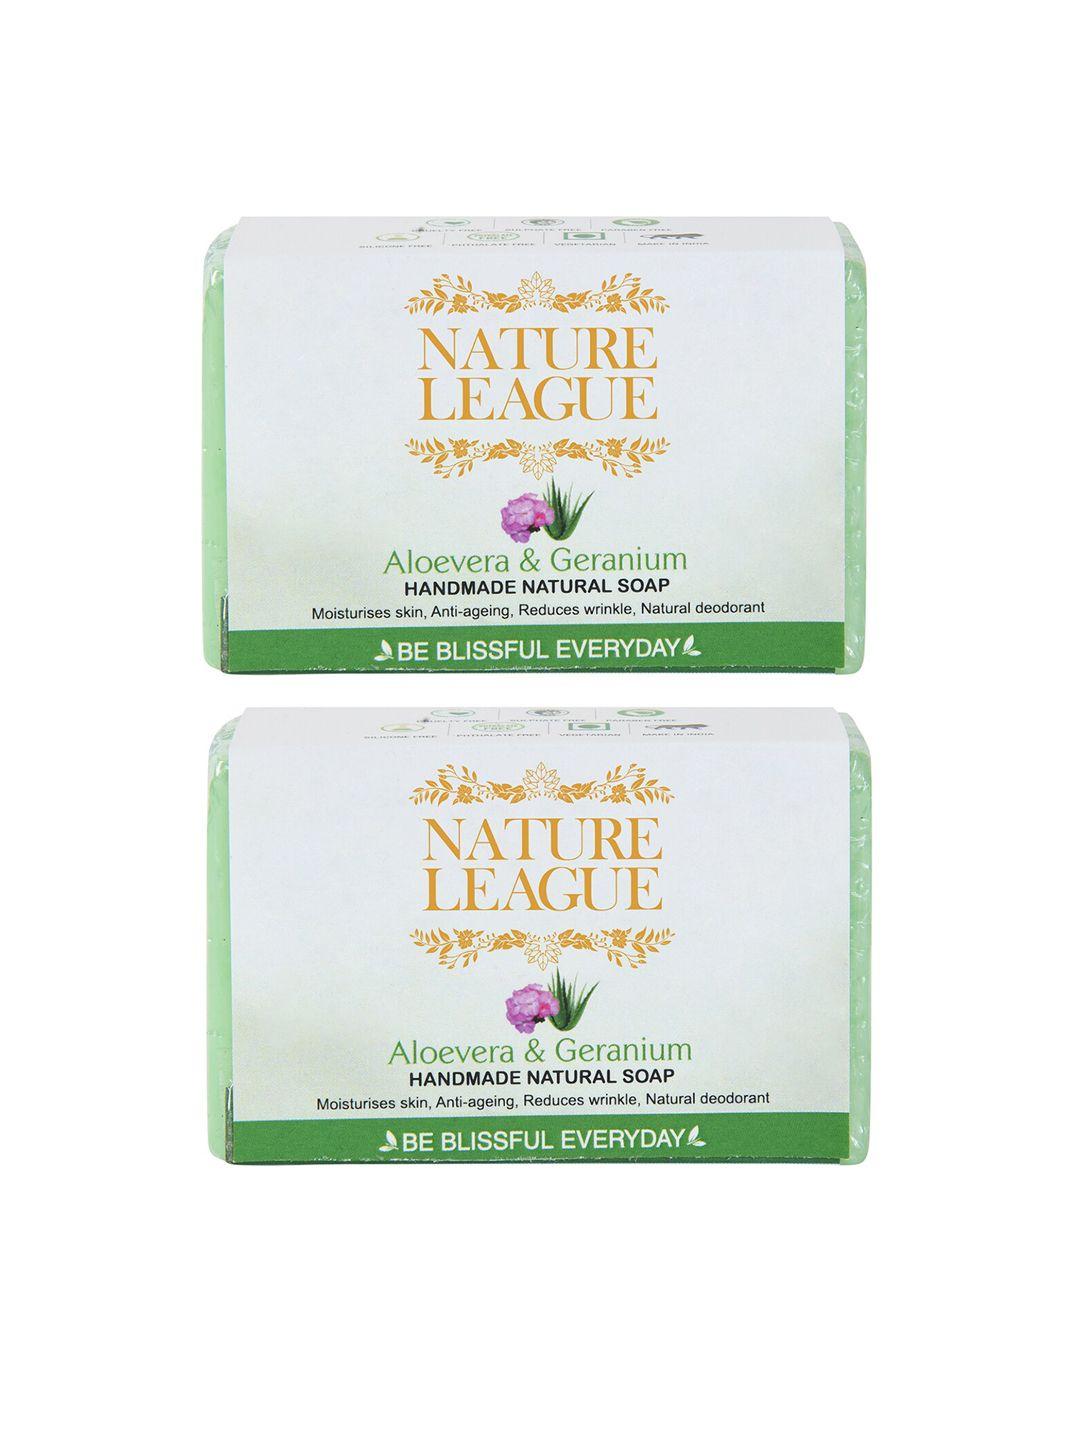 nature league set of 2 aloe vera & geranium natural soaps for anti-ageing - 100g each